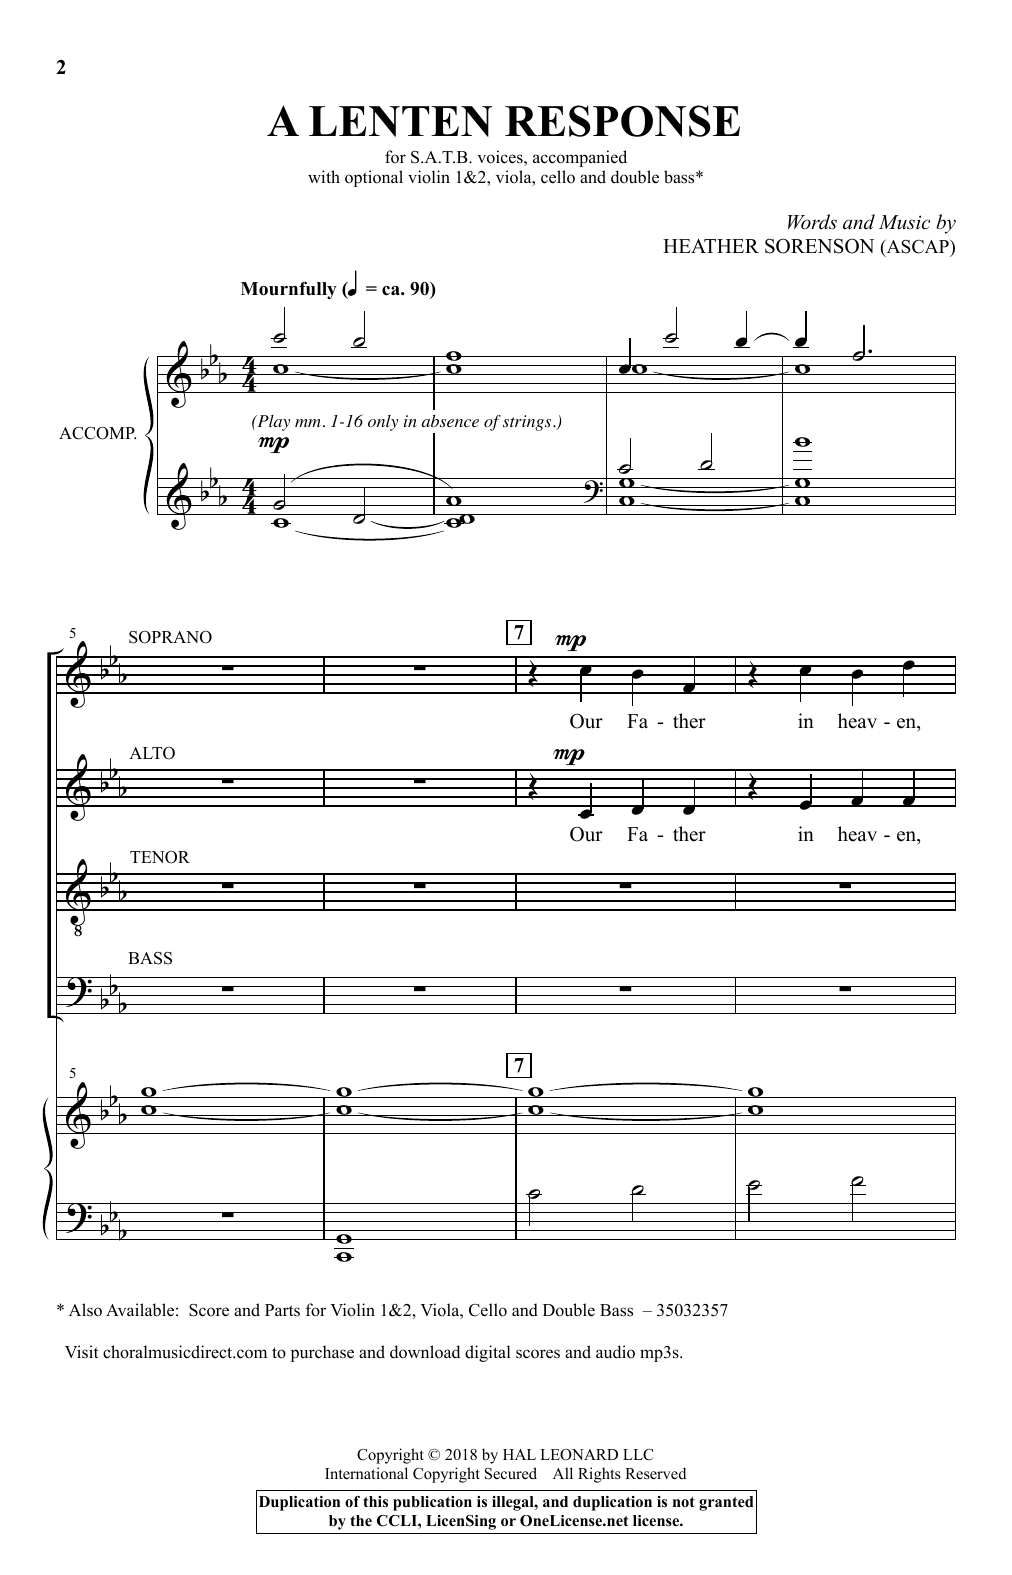 Heather Sorenson A Lenten Response Sheet Music Notes & Chords for SATB Choir - Download or Print PDF